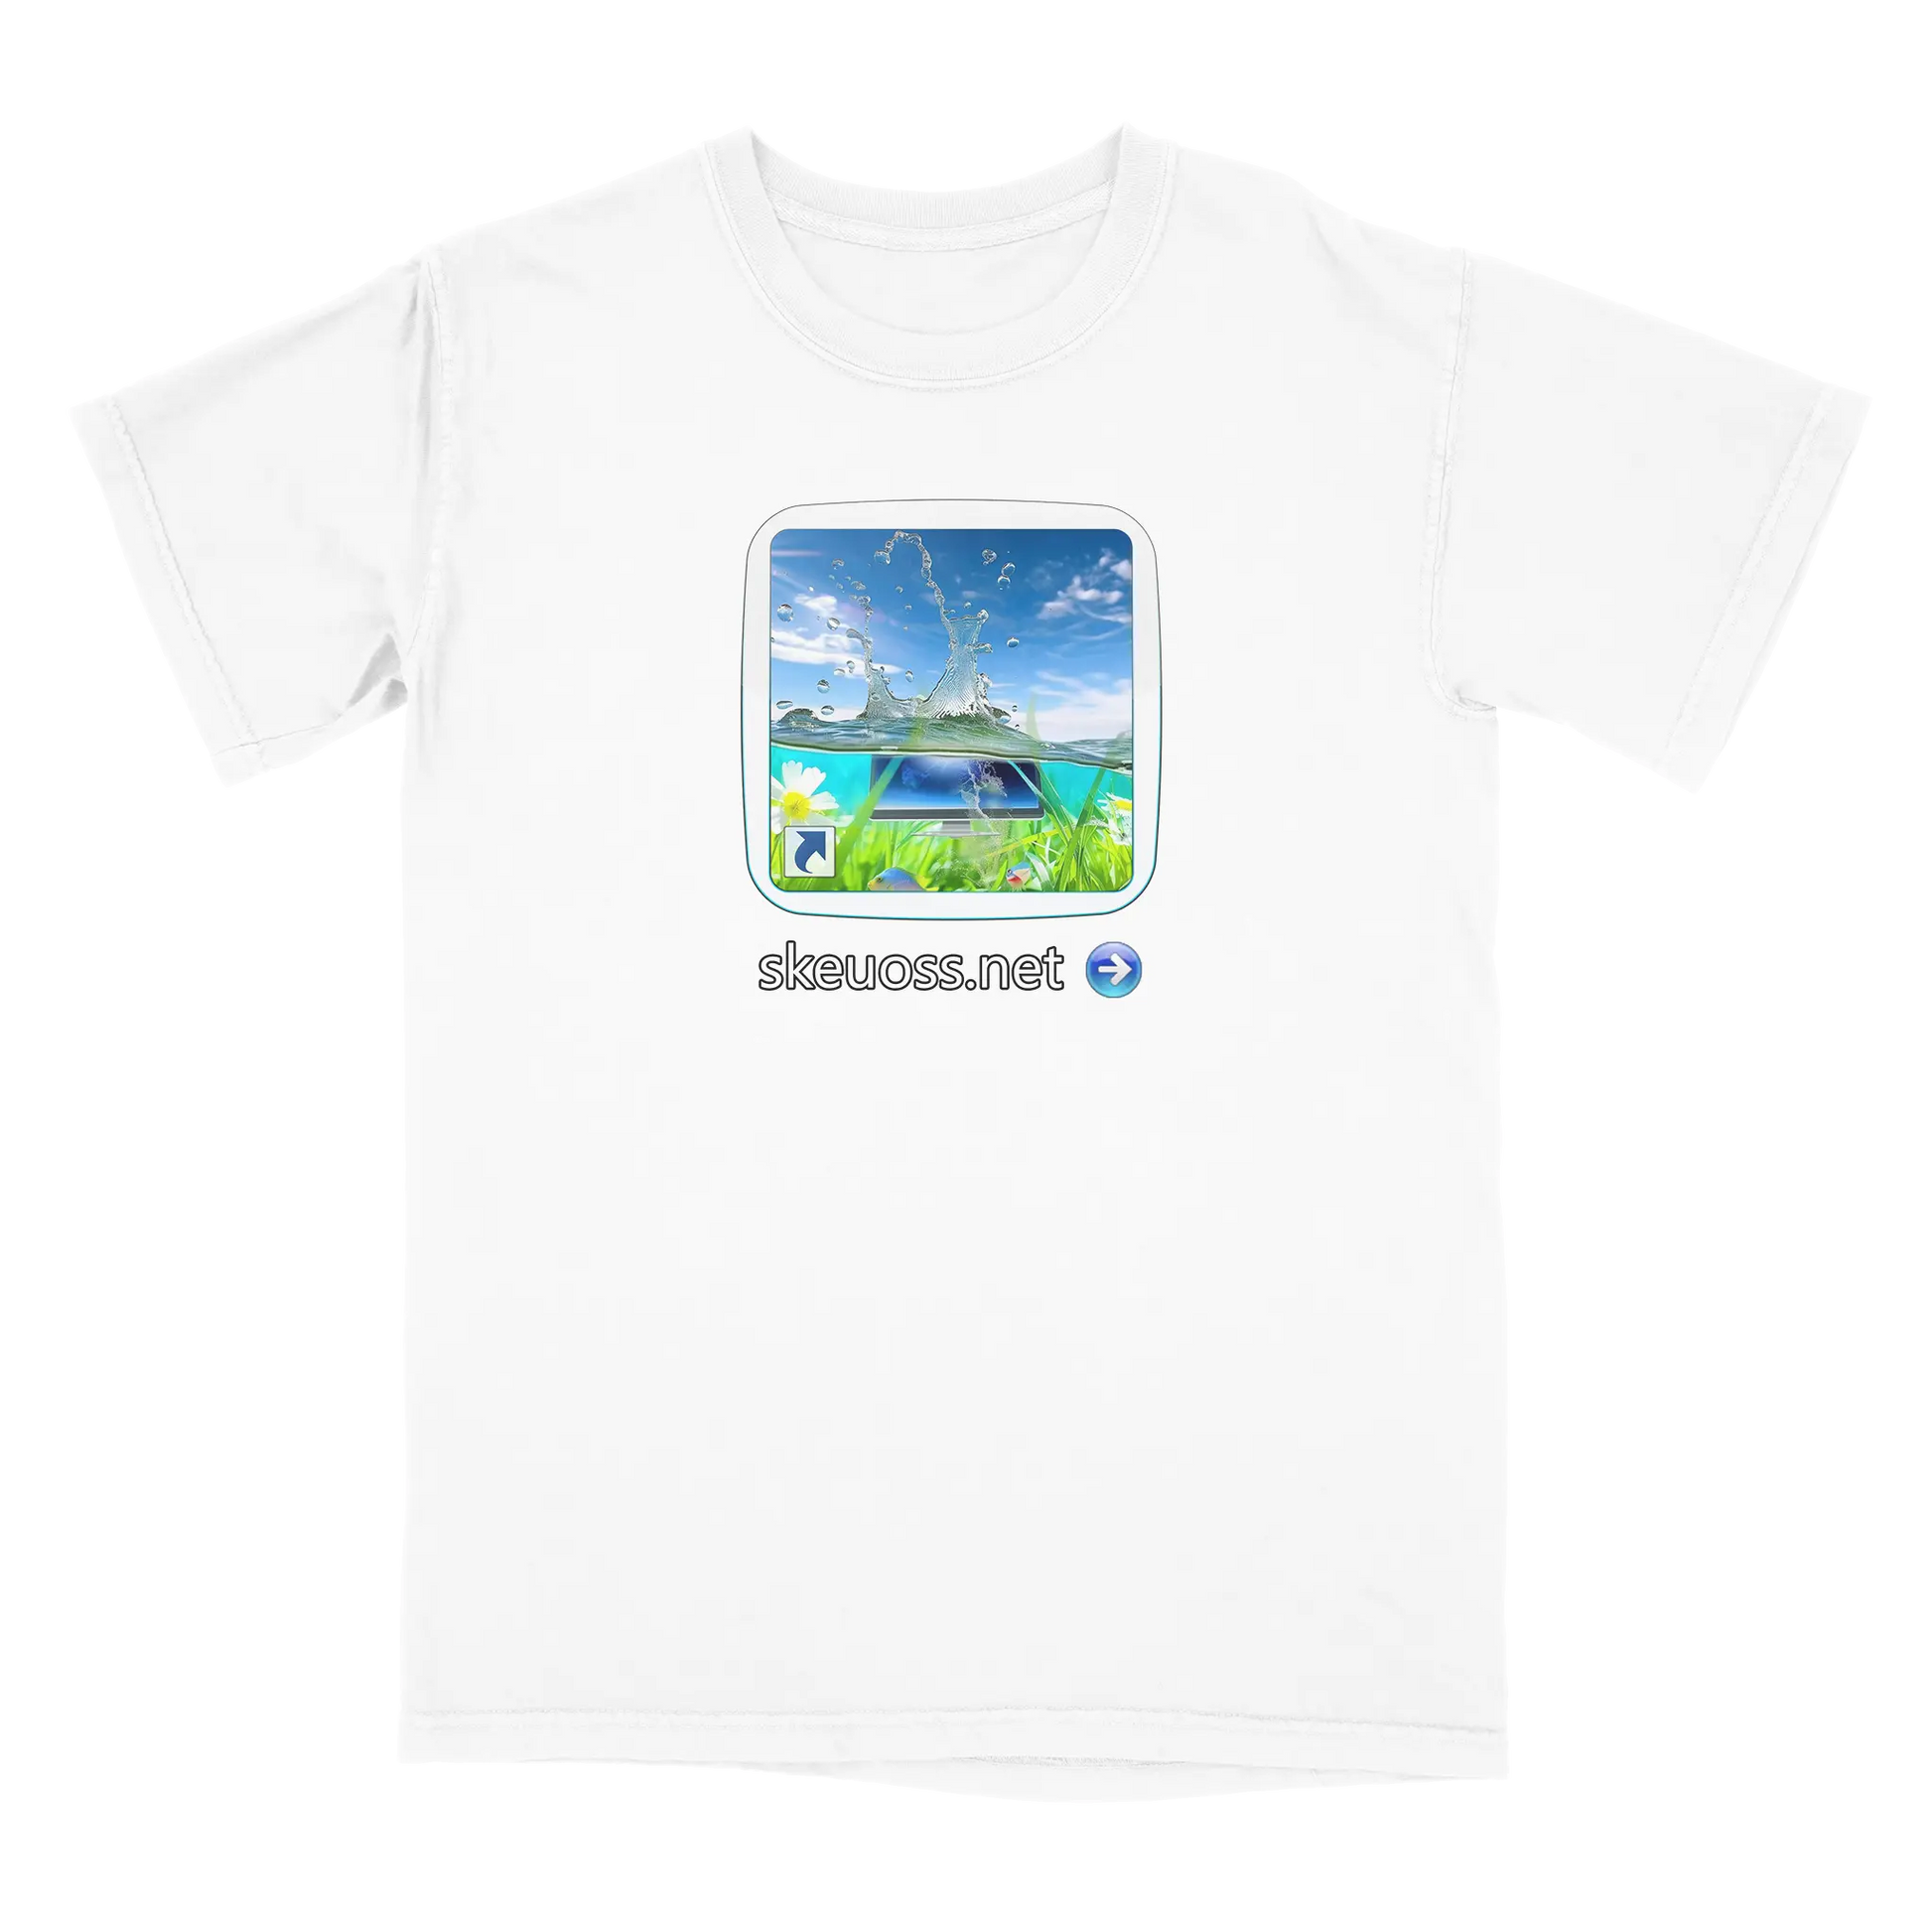 Frutiger Aero T-shirt - User Login Collection - User 284